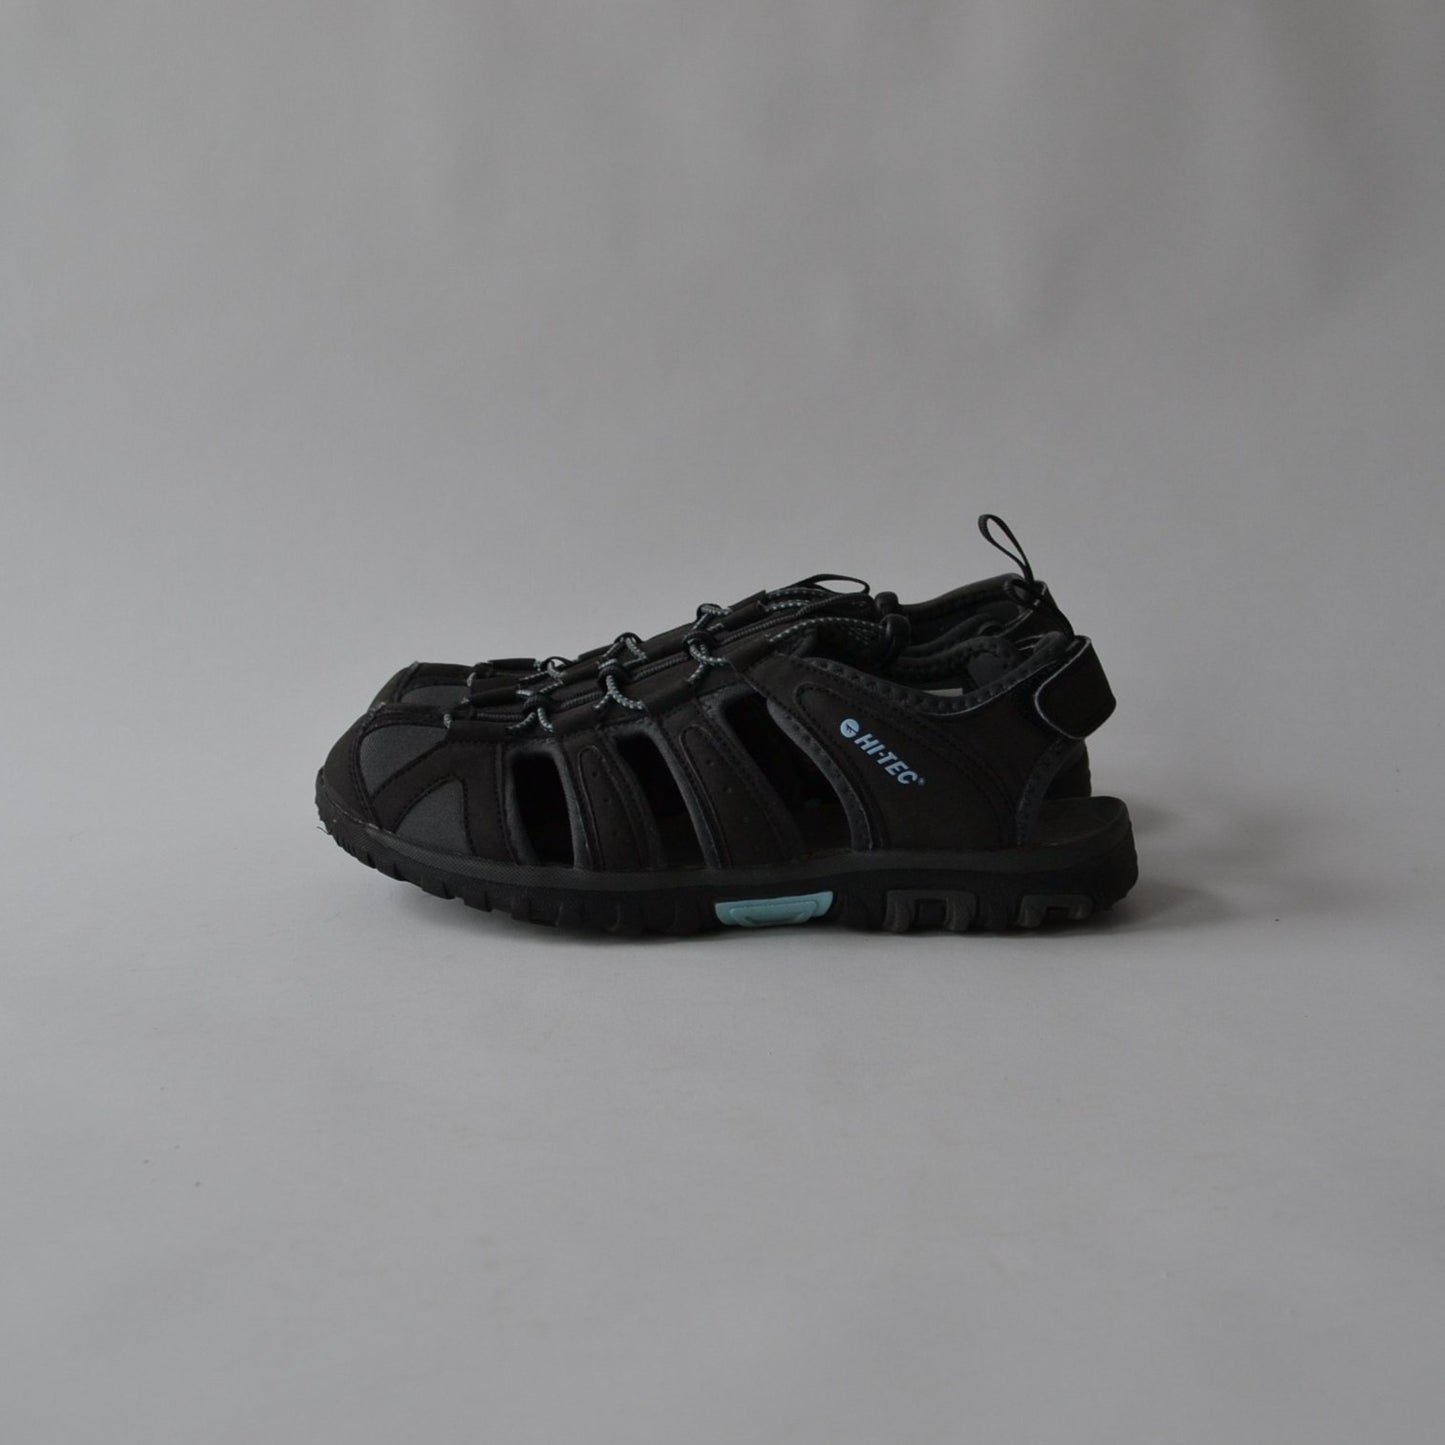 Walking Sandals - Black & Grey - Shoe Size 8